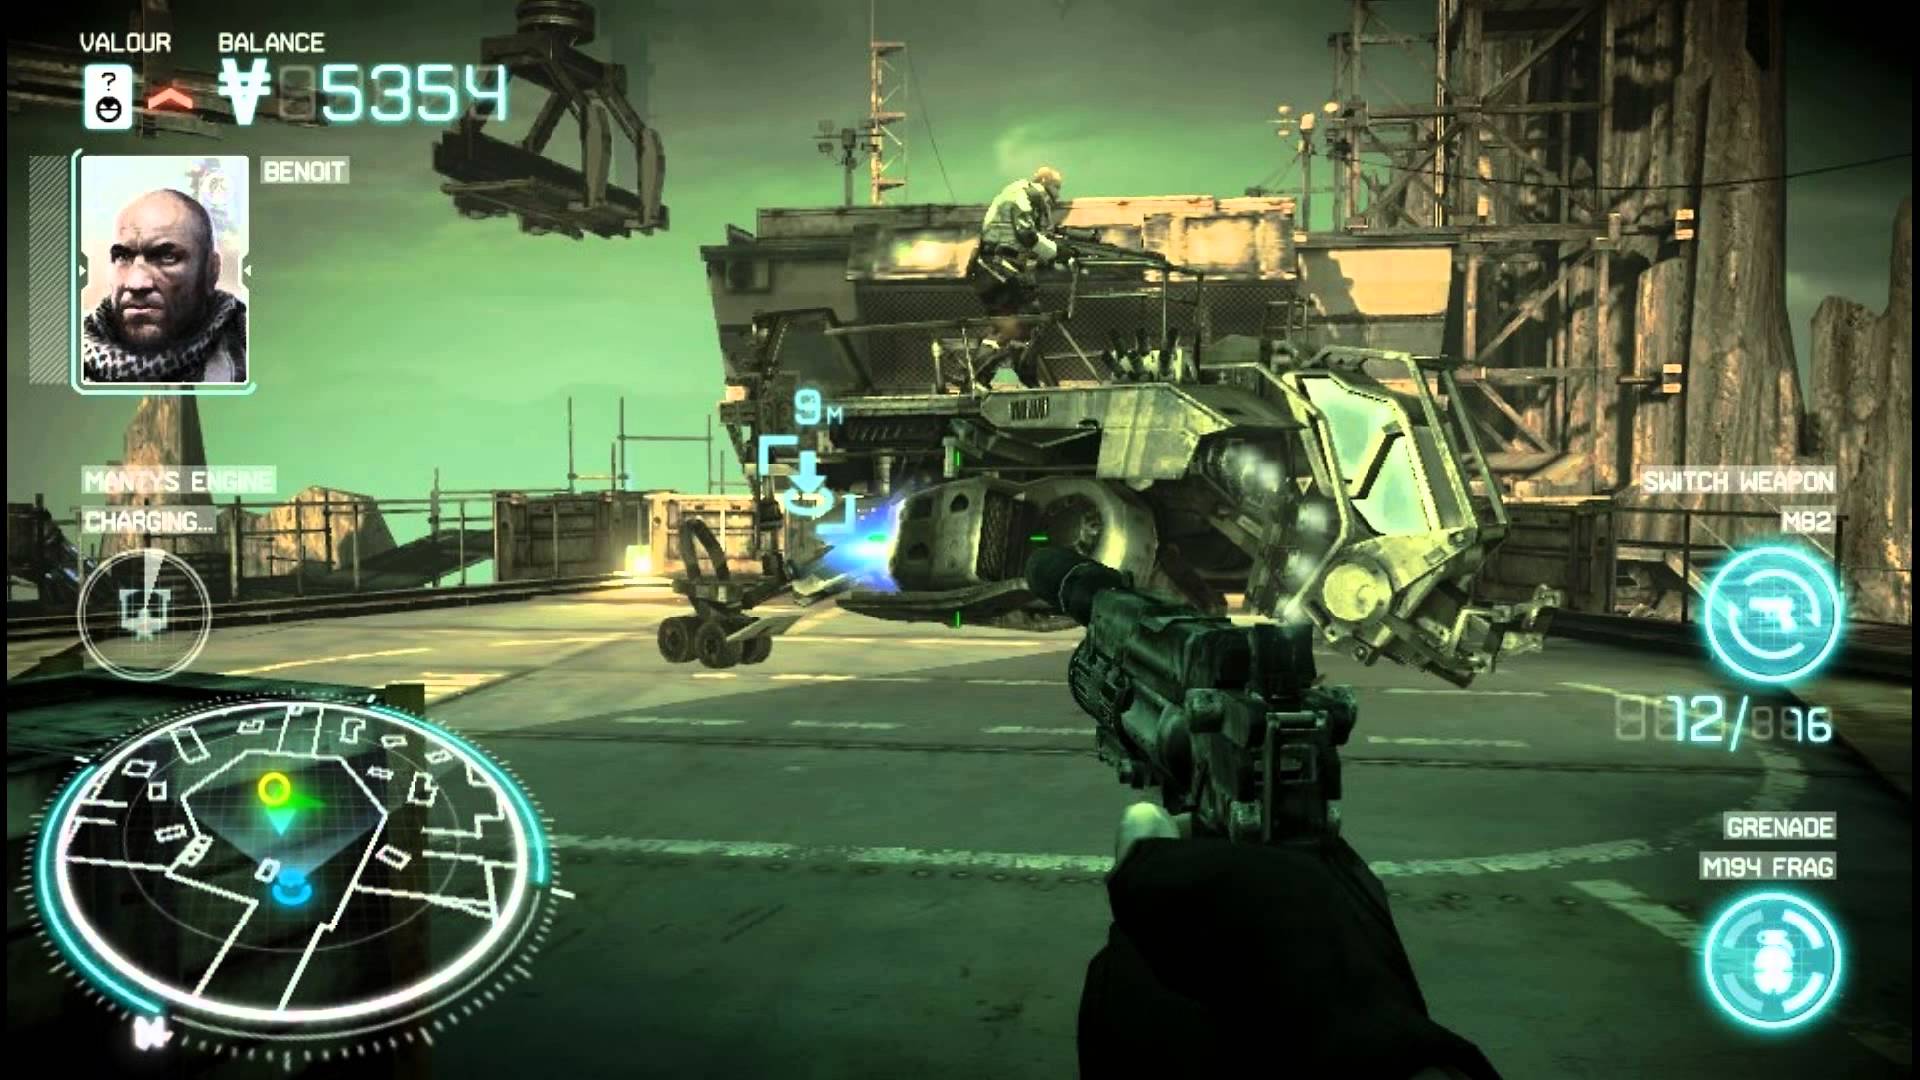 PS Vita Mercenary: New Screenshots: Lightning Strike